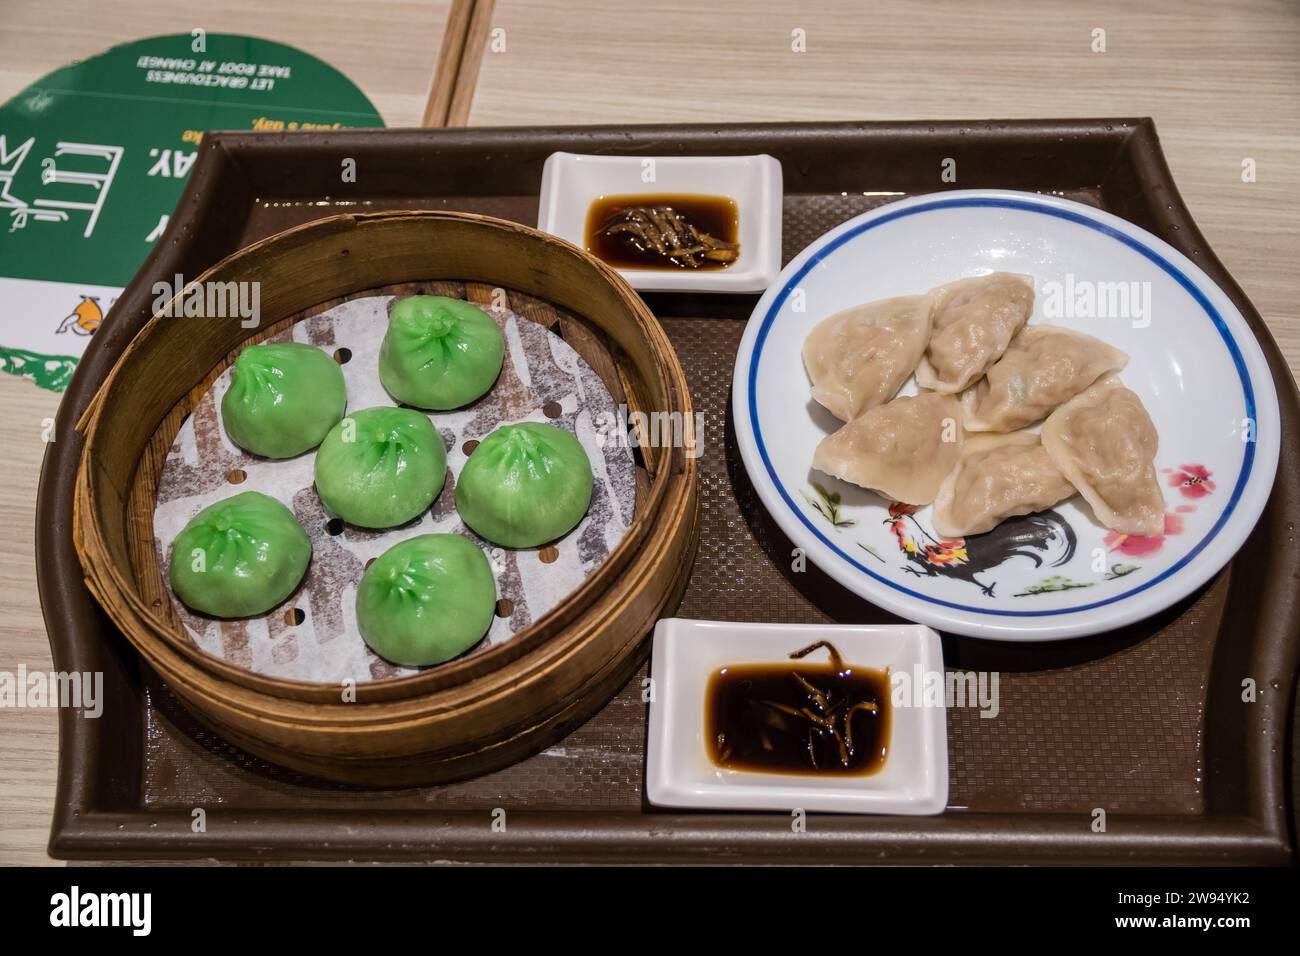 Dumplings and Gyozas, food plates, at Changi Airport, Singapore Stock Photo